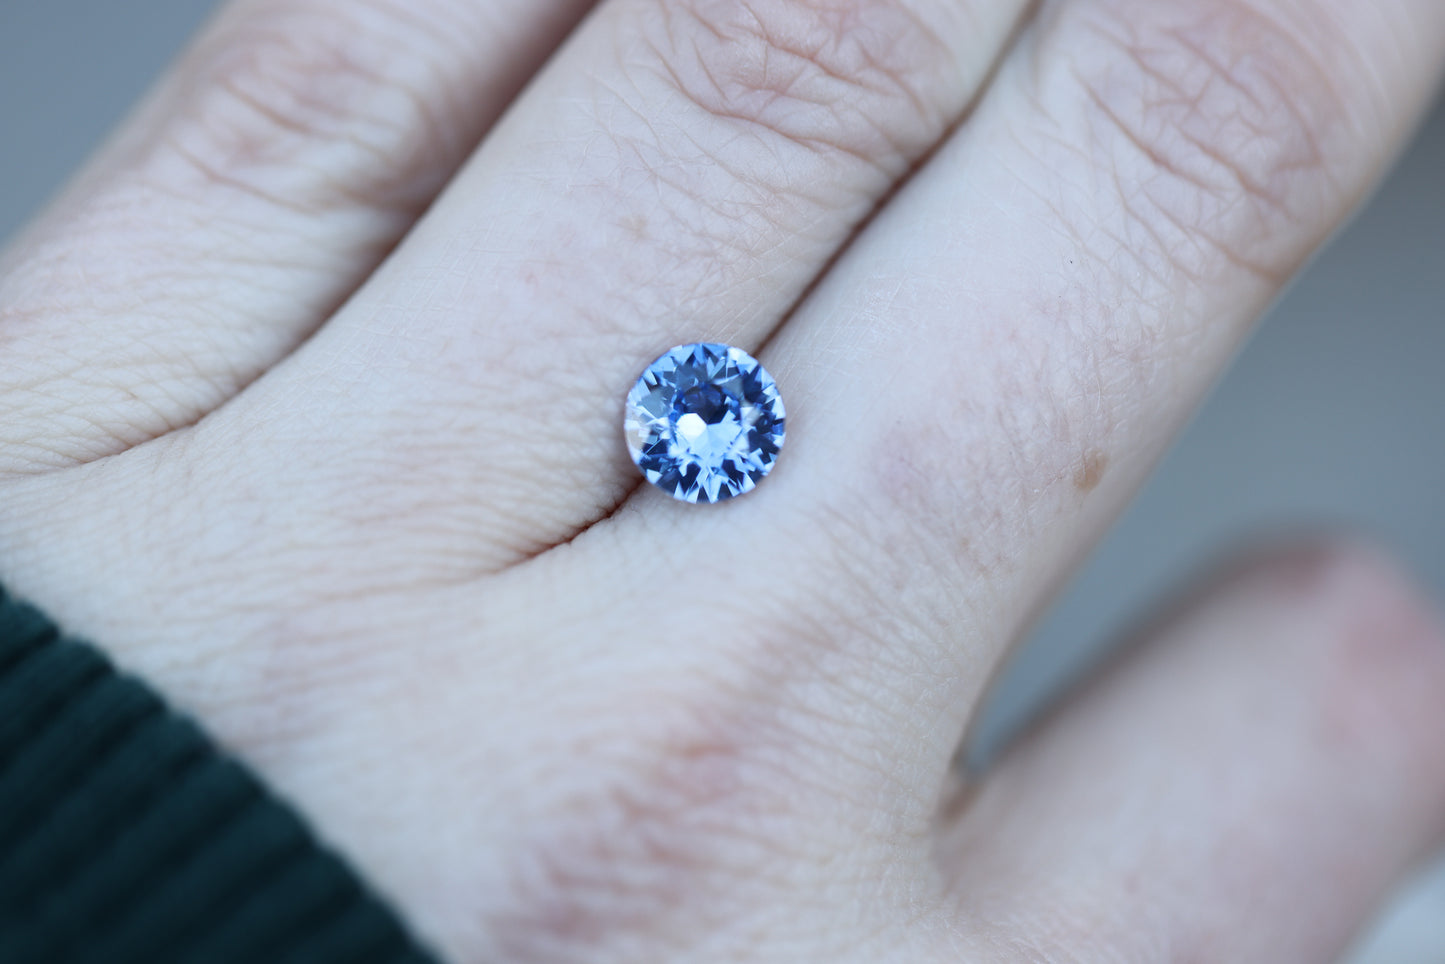 2ct round medium blue sapphire